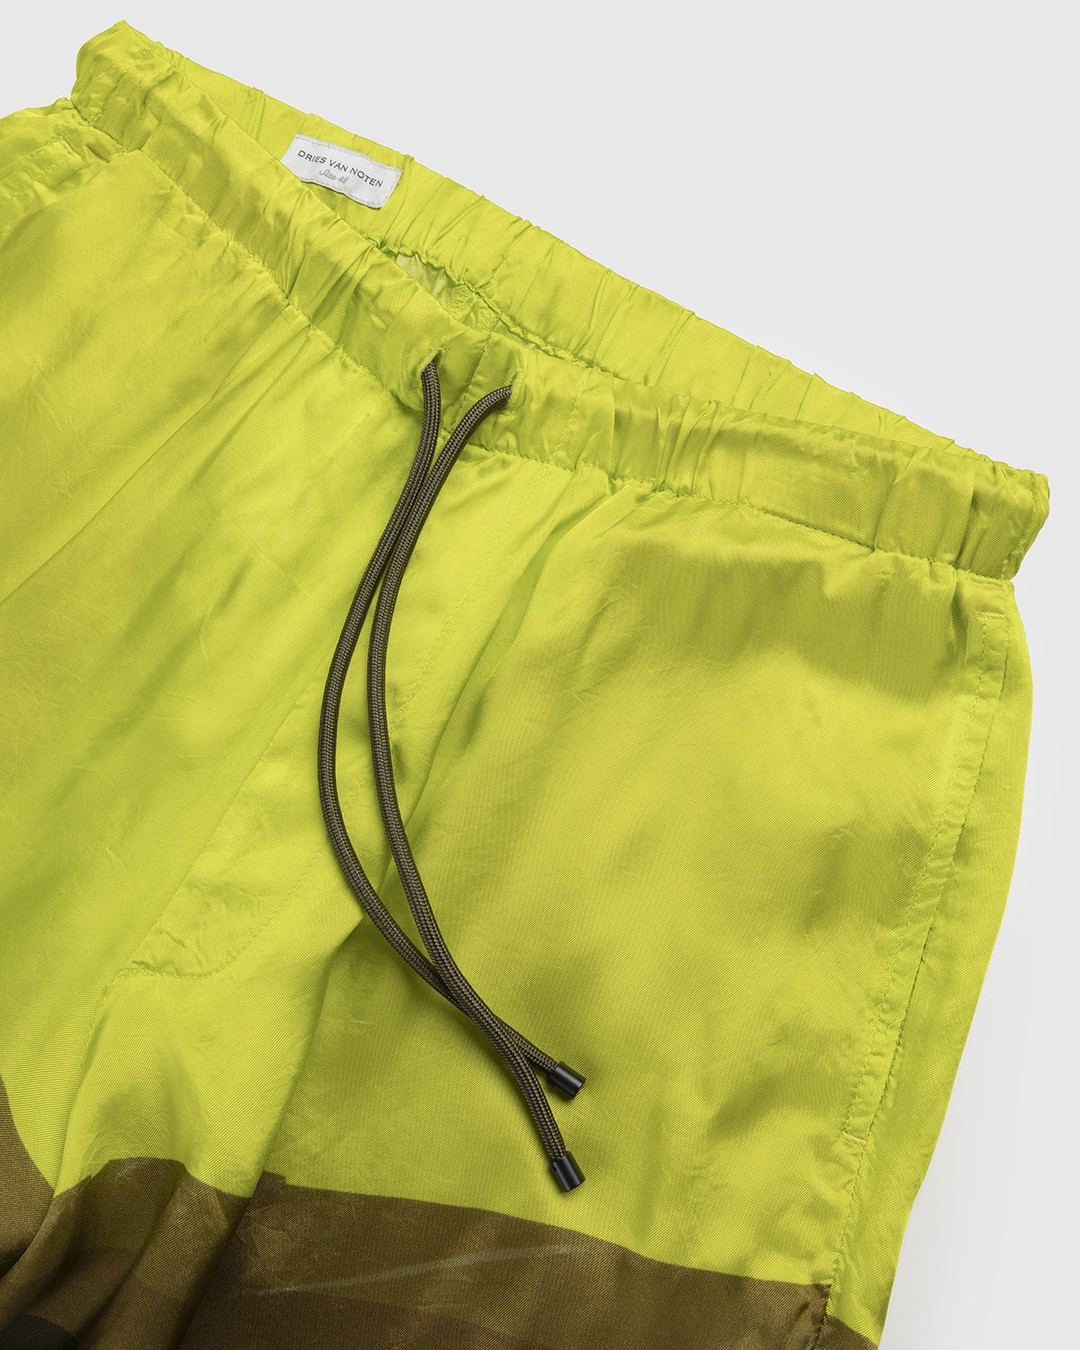 Dries van Noten – Piperi Shorts Yellow - Shorts - Yellow - Image 4